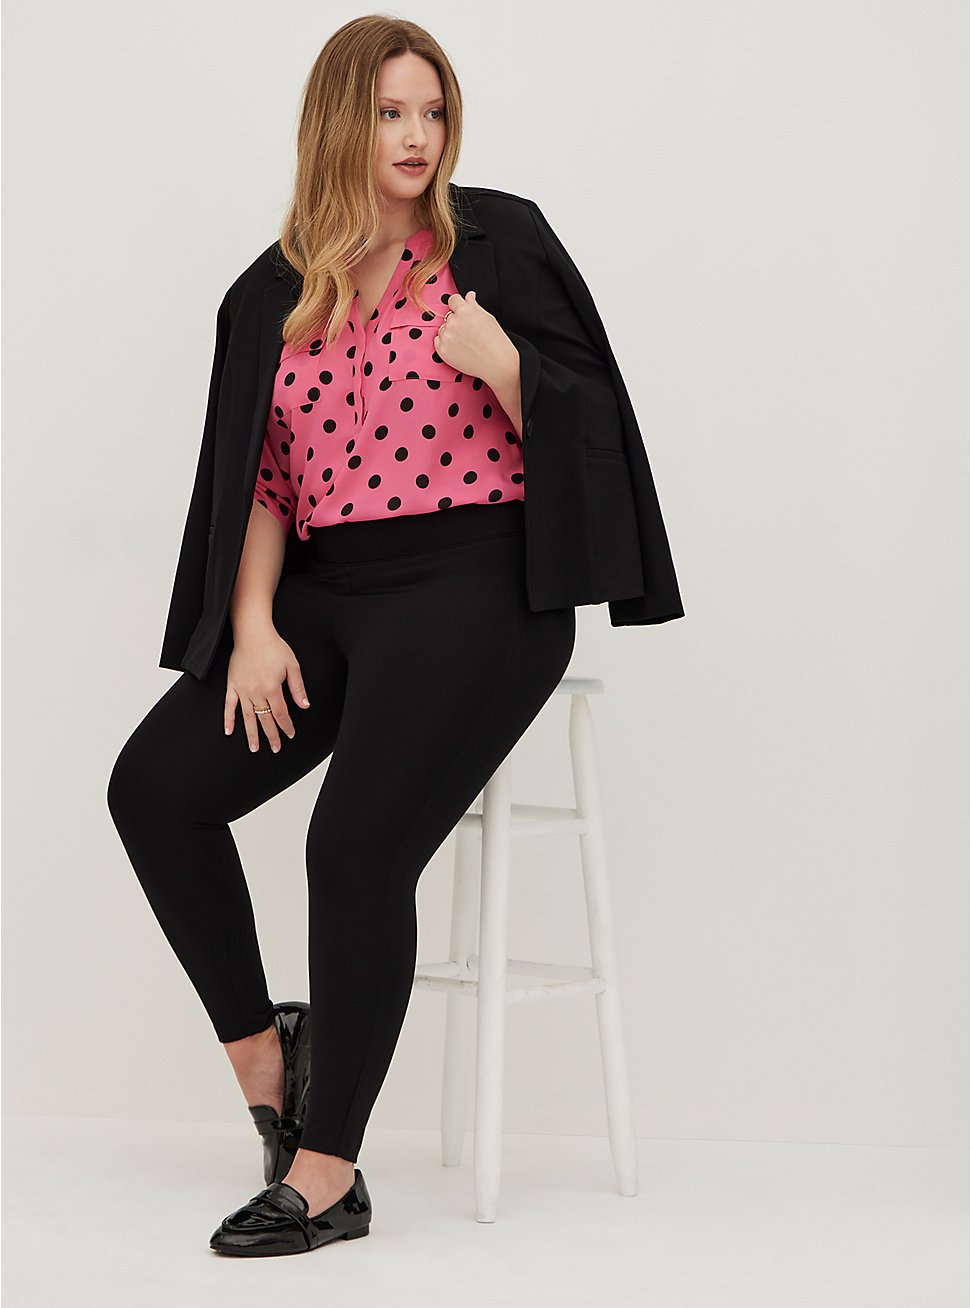 Plus Size Harper Pullover Tunic Blouse - Georgette Polka Dot Pink, DOTS - PINK, hi-res